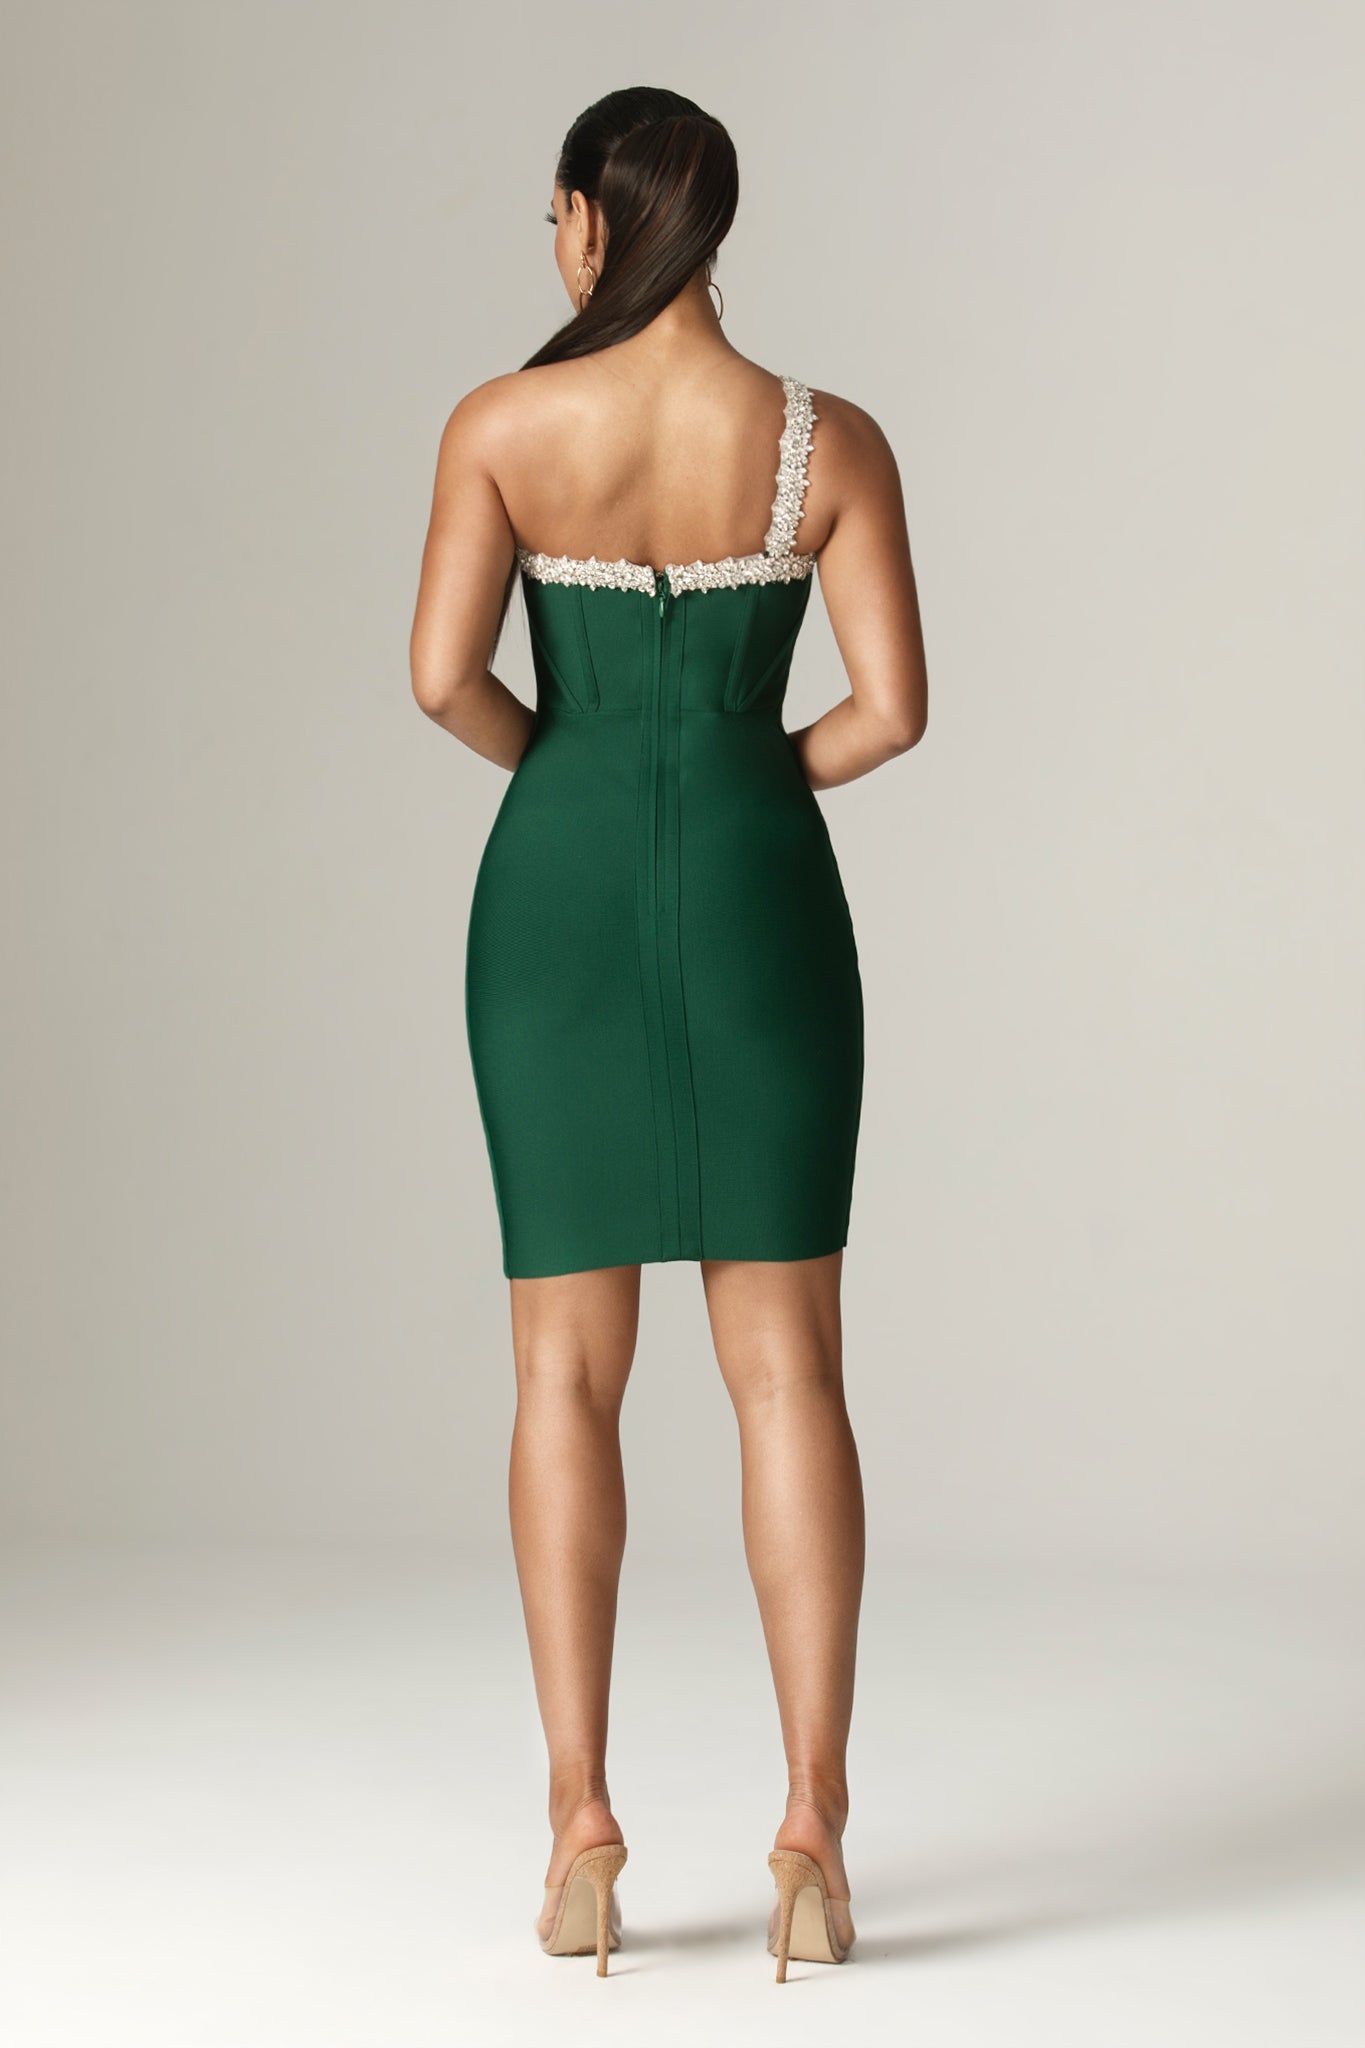 Diva Rhinestone Bandage Midi Dress (Emerald Green)